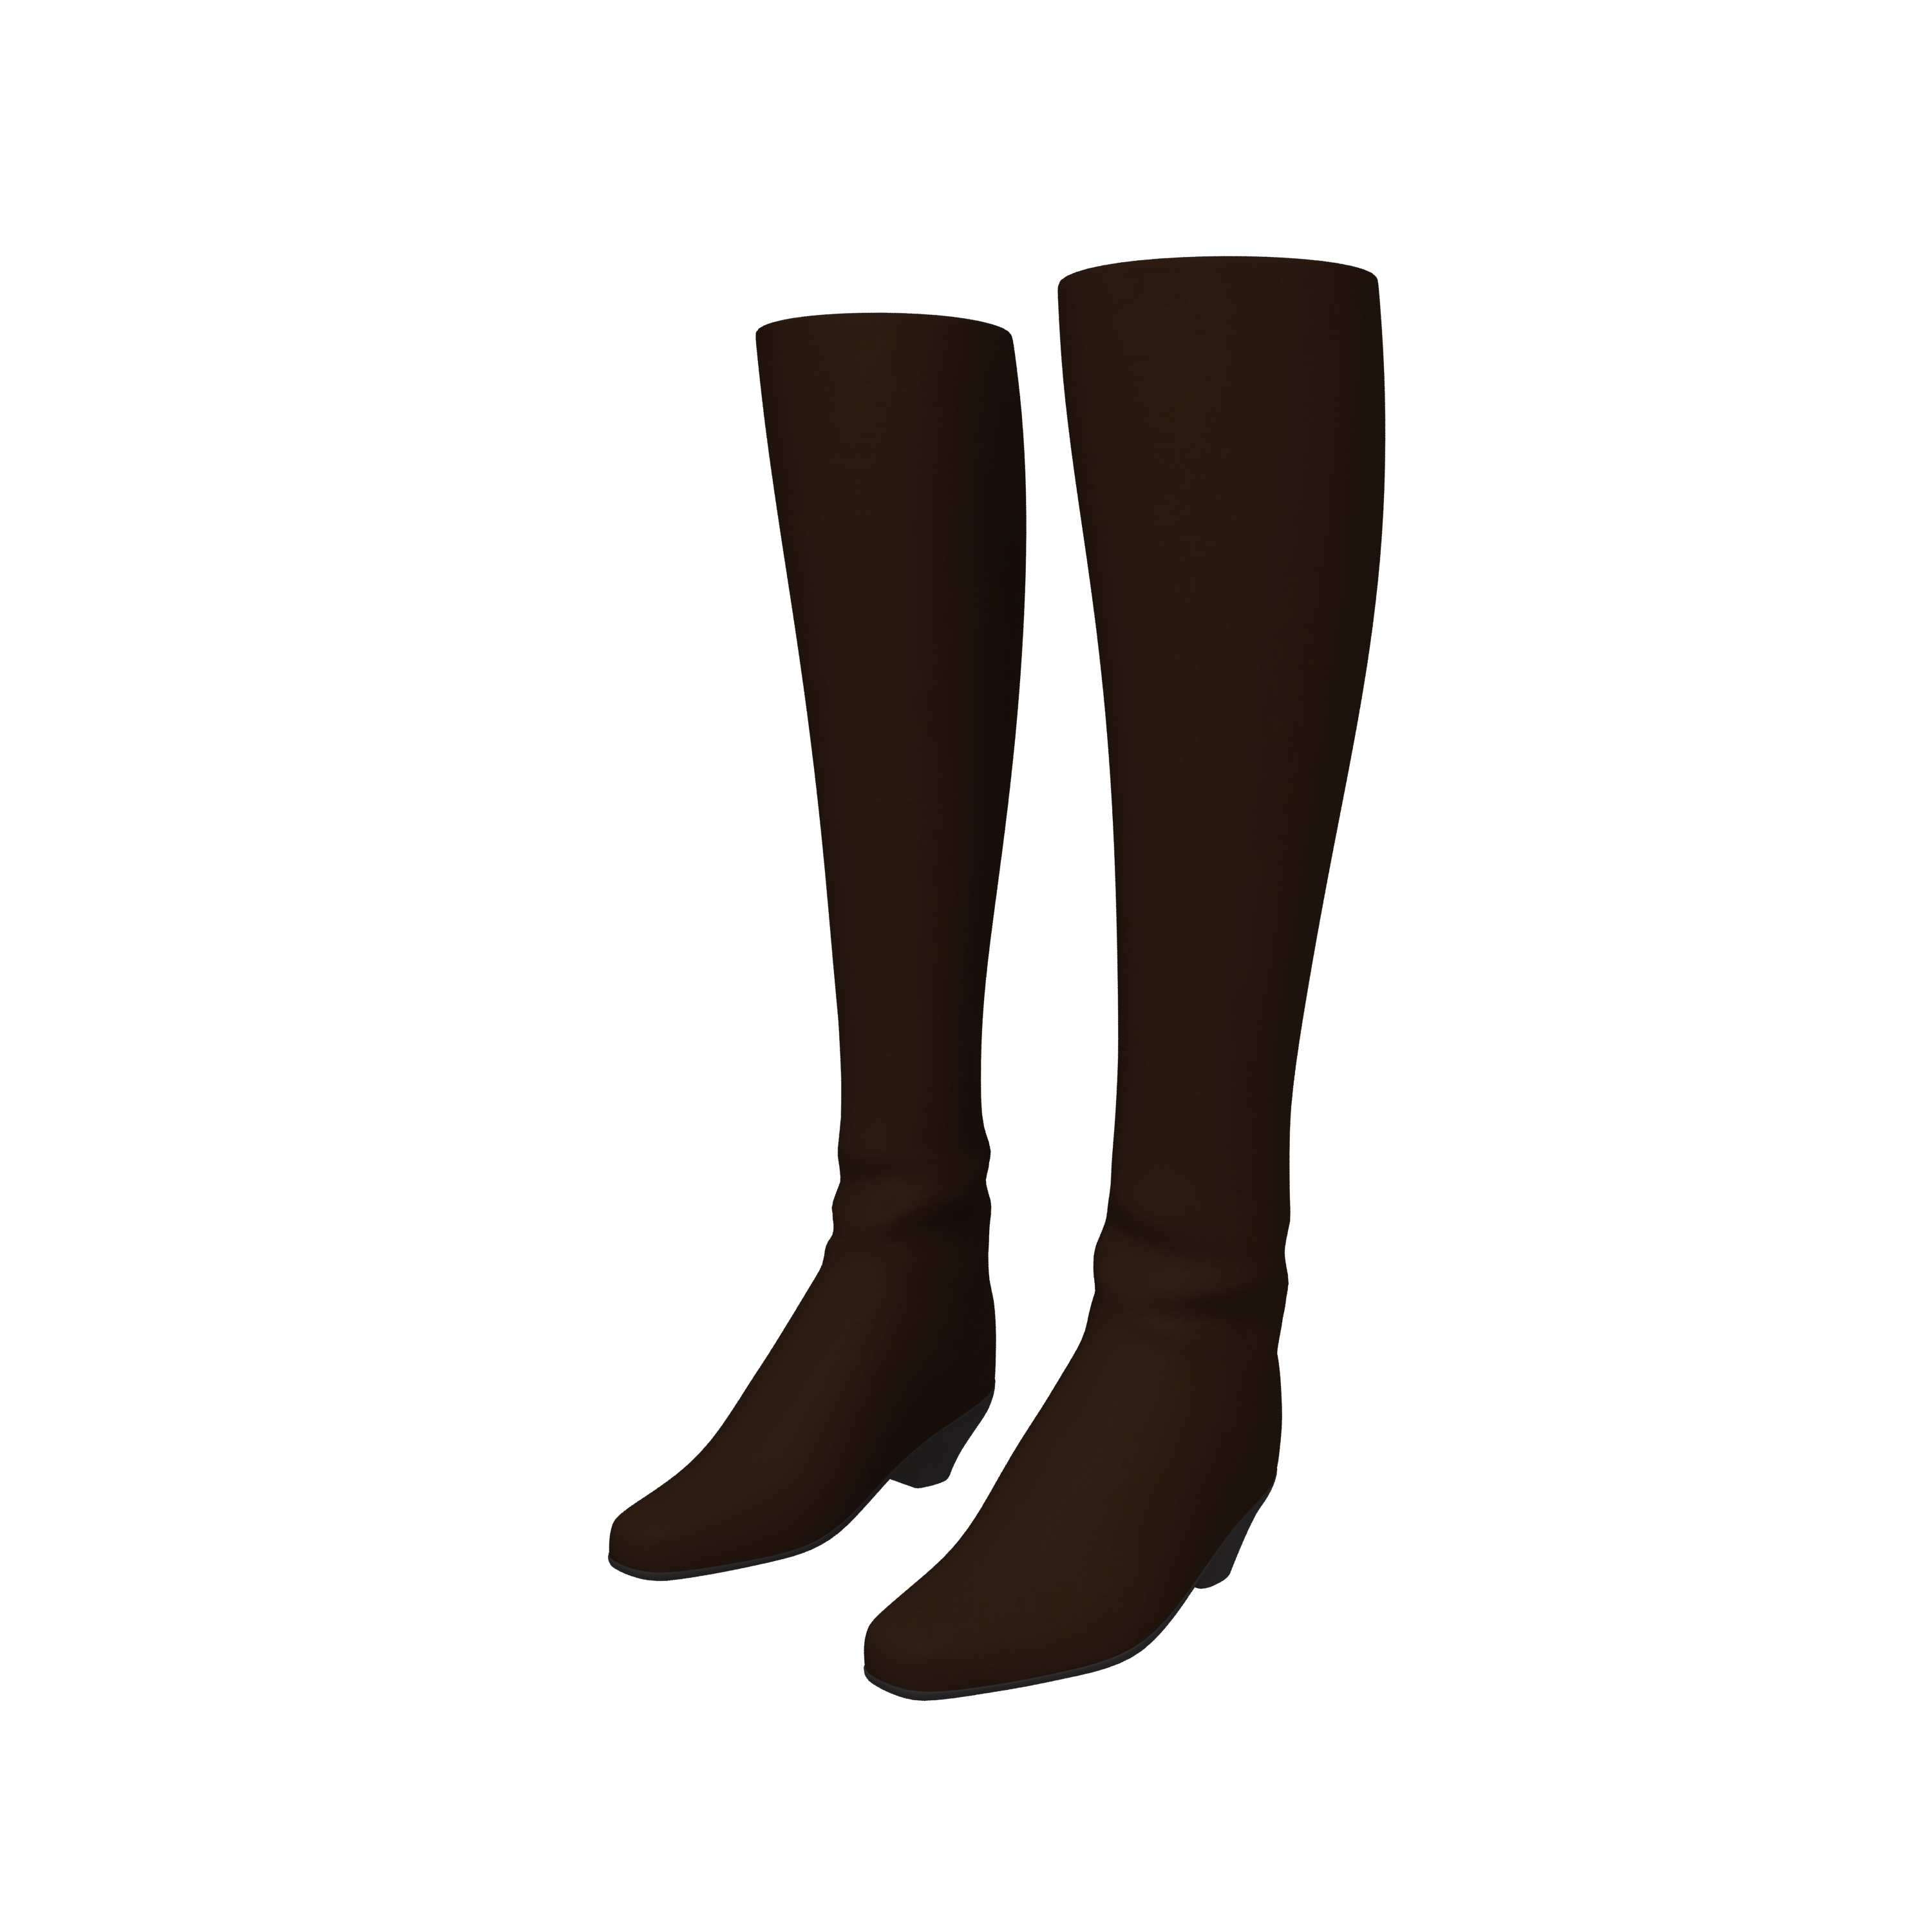 3D model boots cartoon woman - TurboSquid 1707285